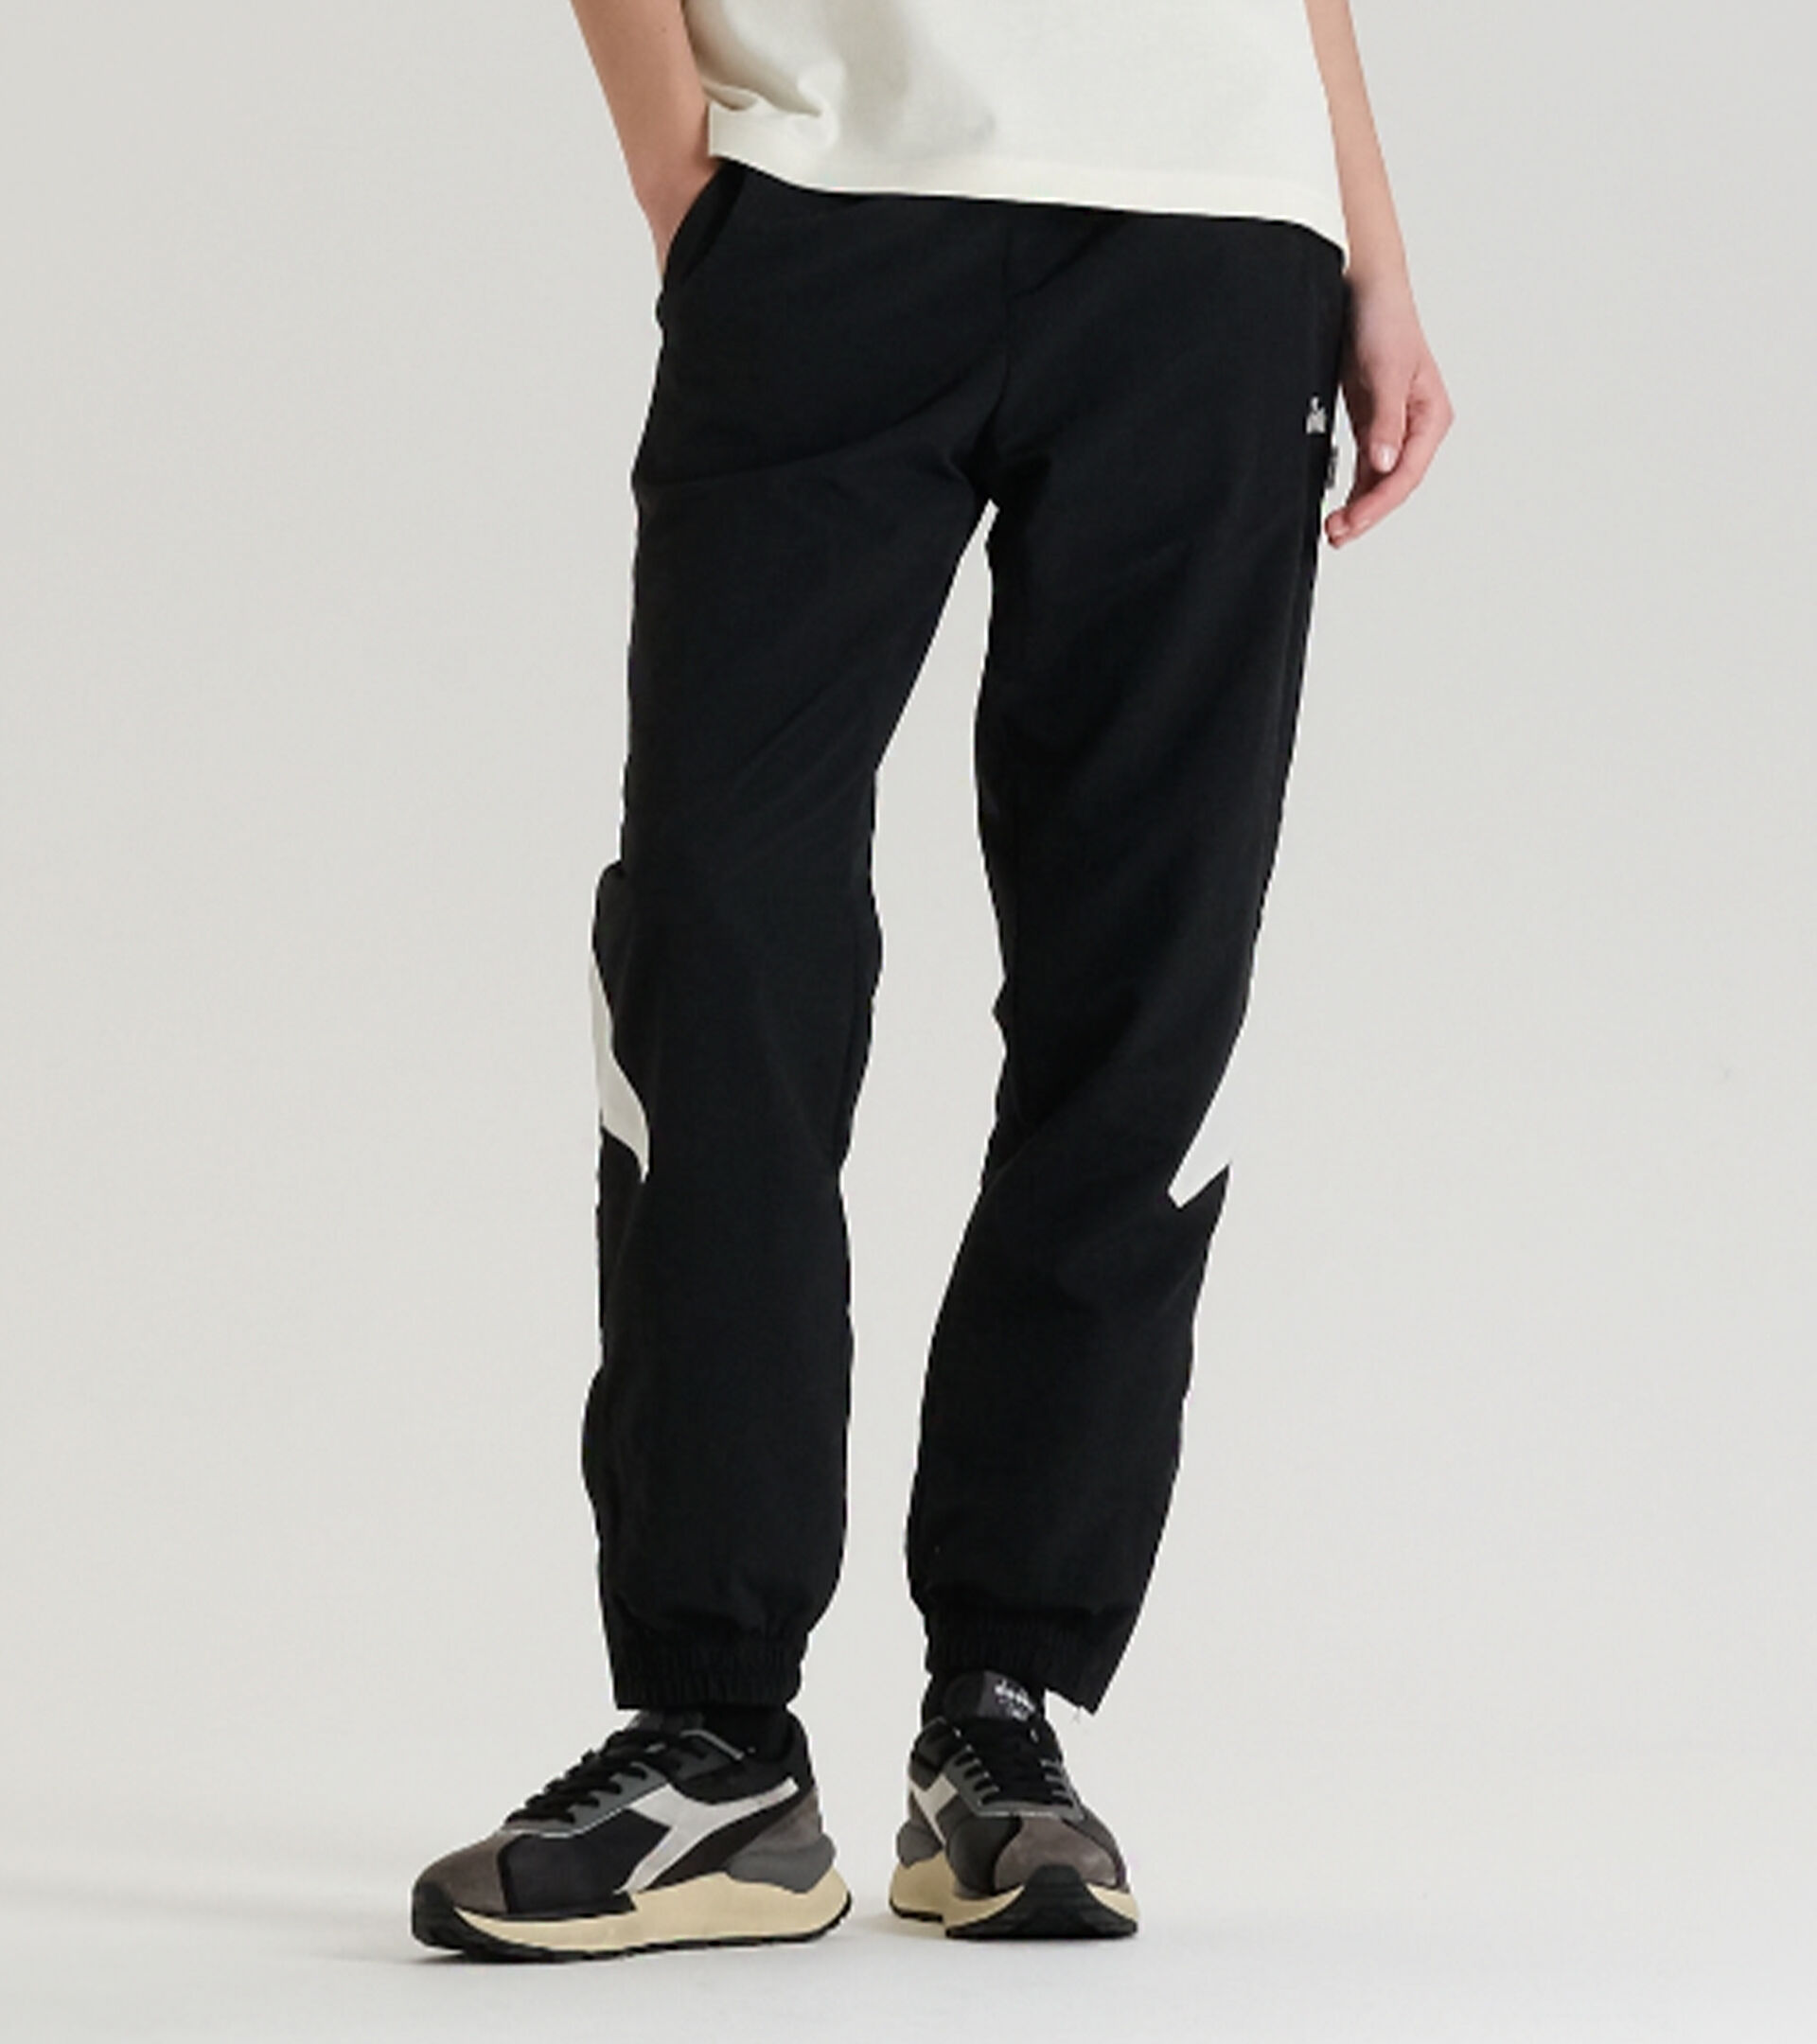 Pantalon de sport - Made in Italy - Genre neutre TRACK PANTS LEGACY NOIR - Diadora